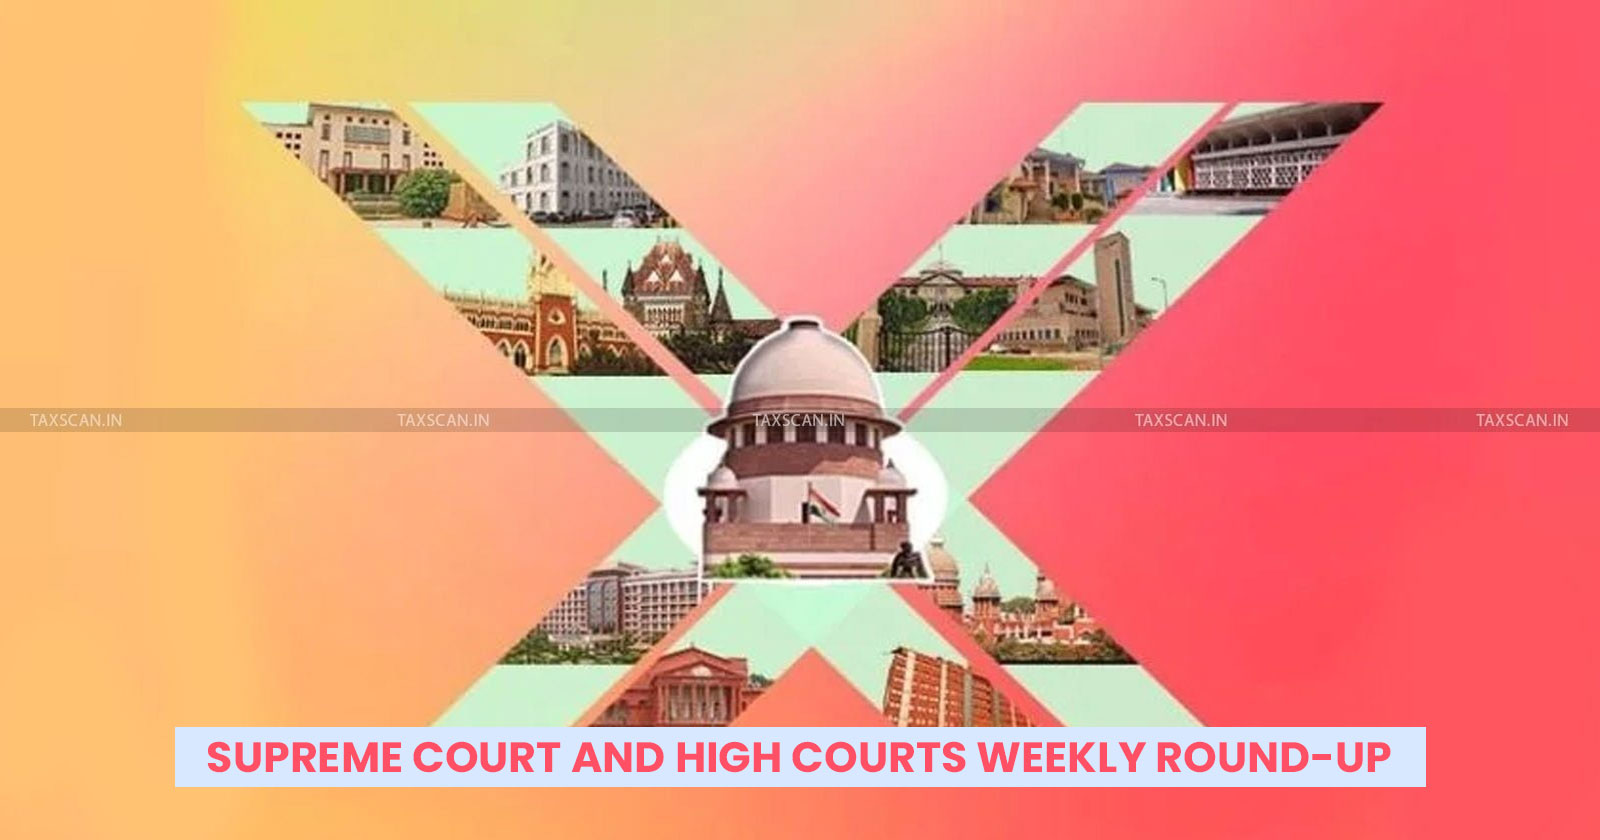 Supreme court weekly round up - High court weekly round up - Supreme court weekly news - High court weekly news - Weekly round up - TAXSCAN